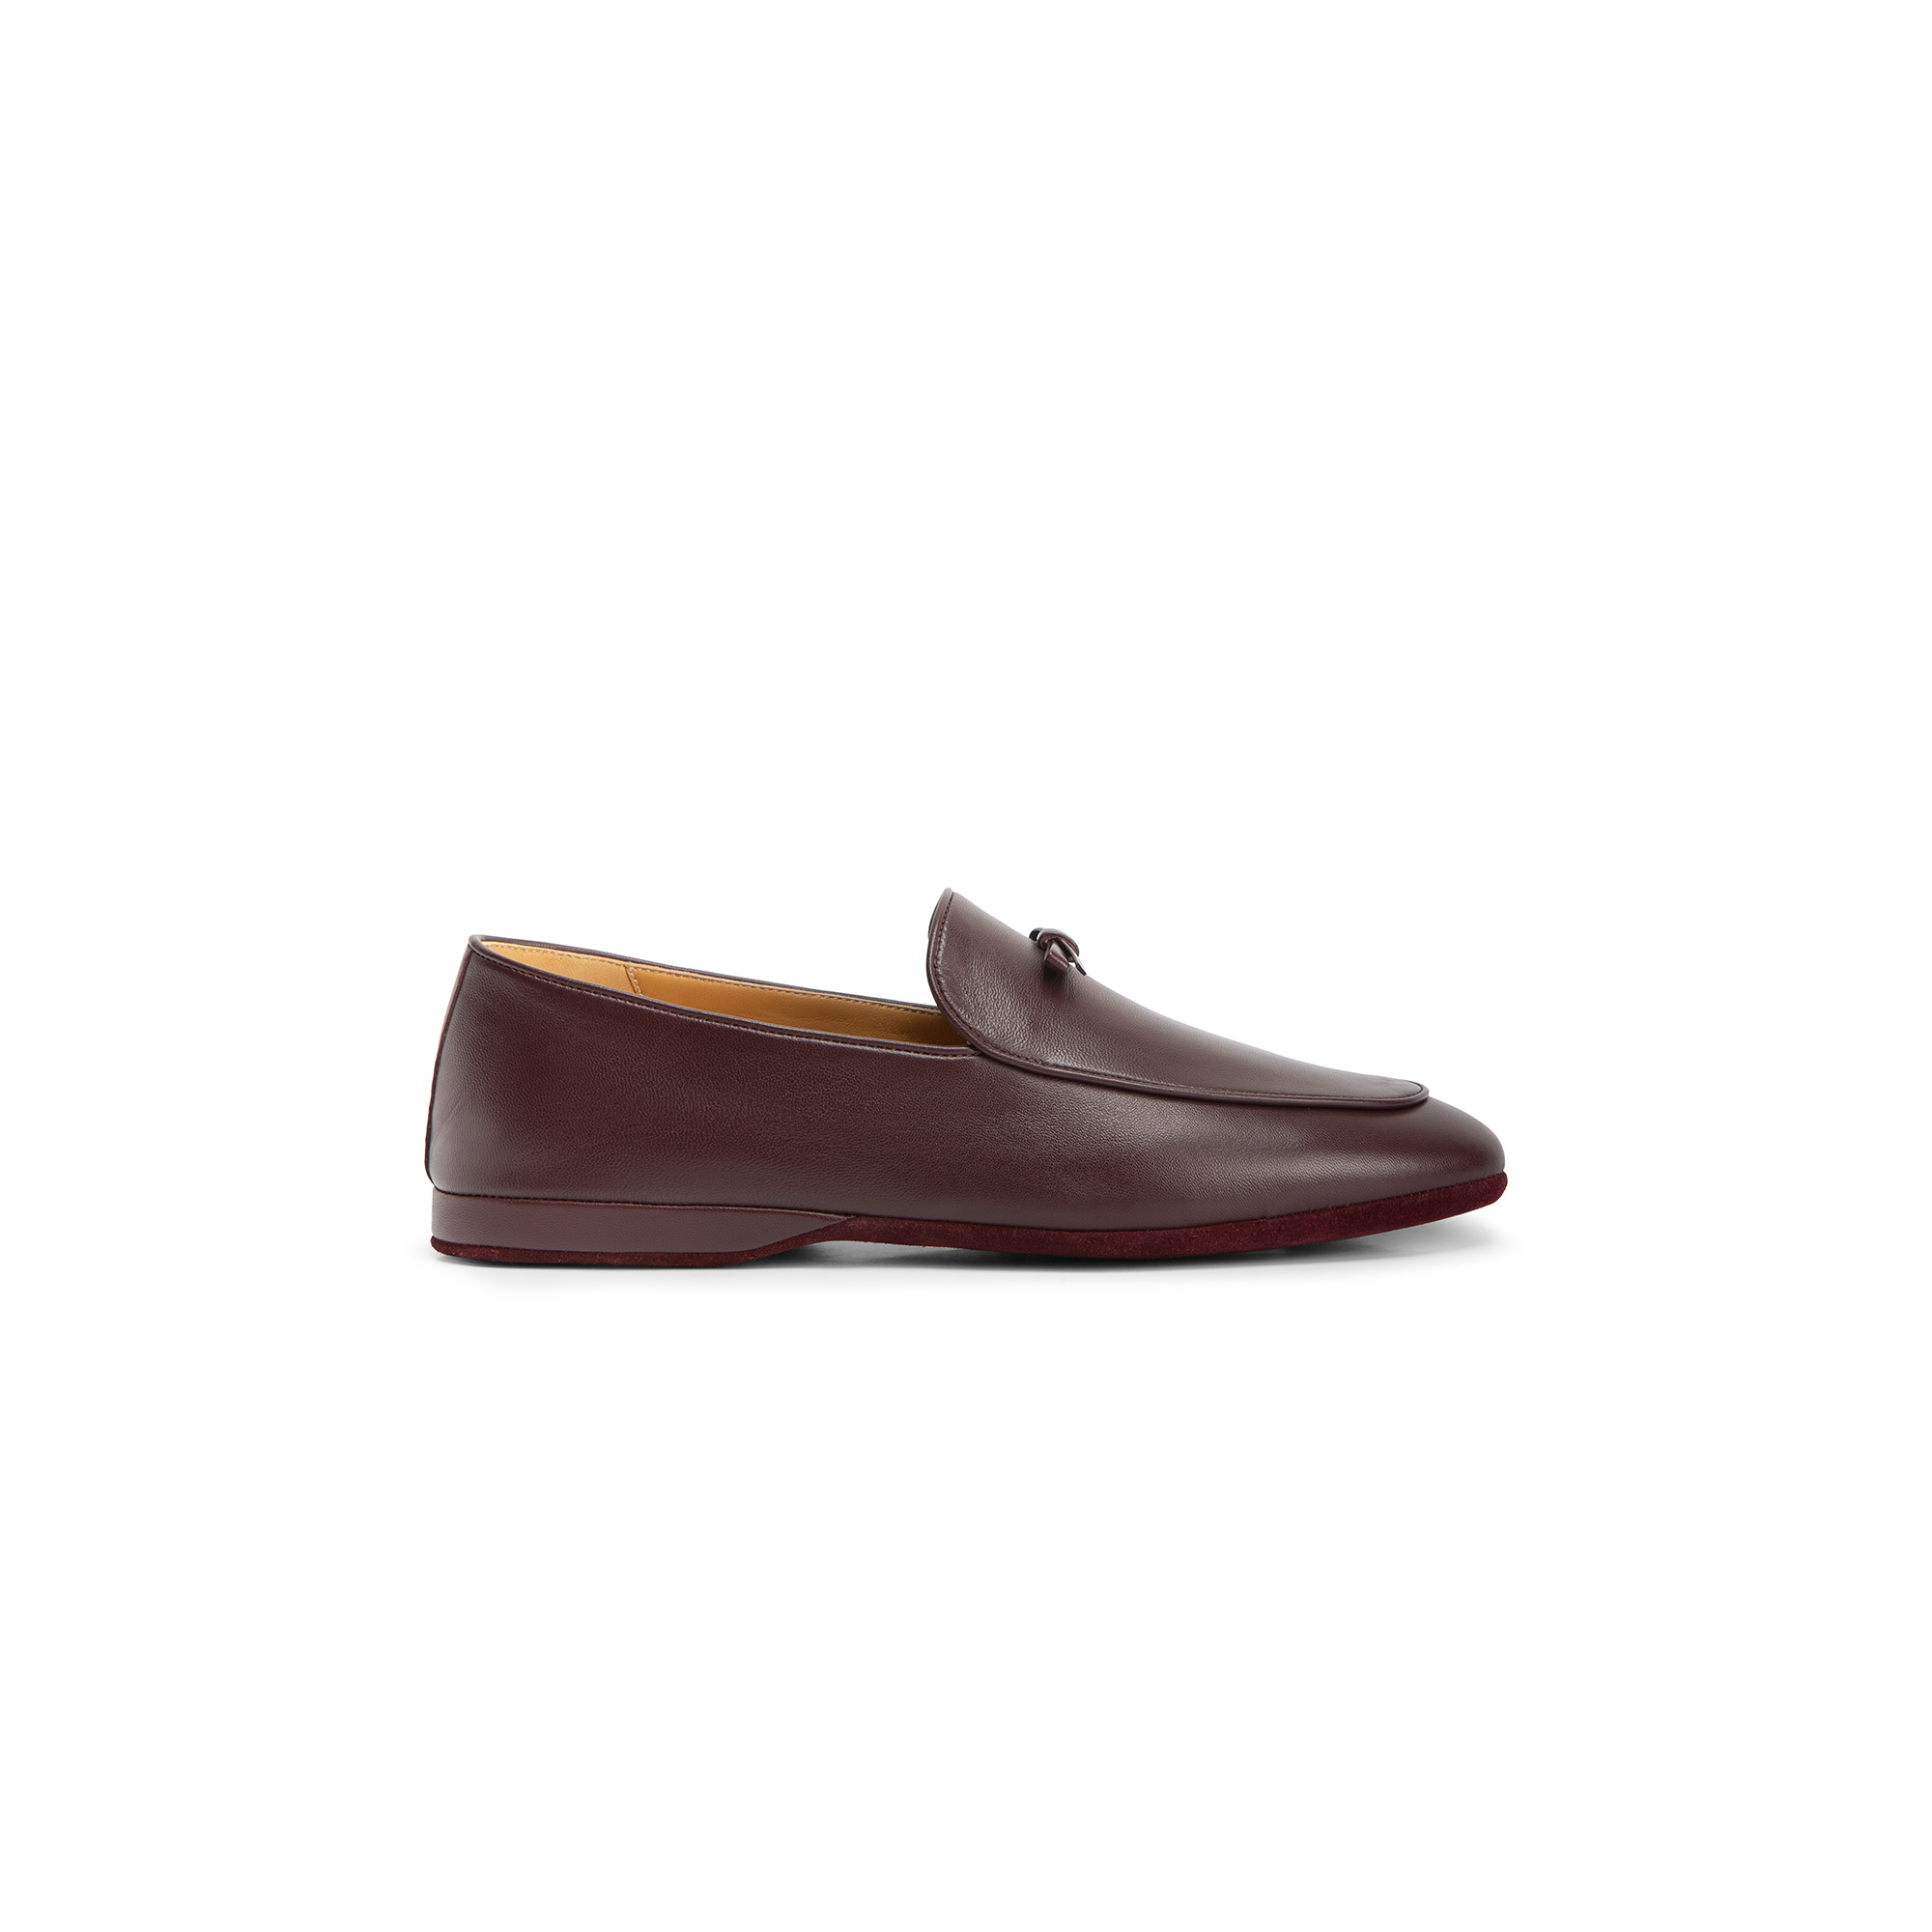 Classic indoor closed burgundy nappa leather slipper - Farfalla italian slippers